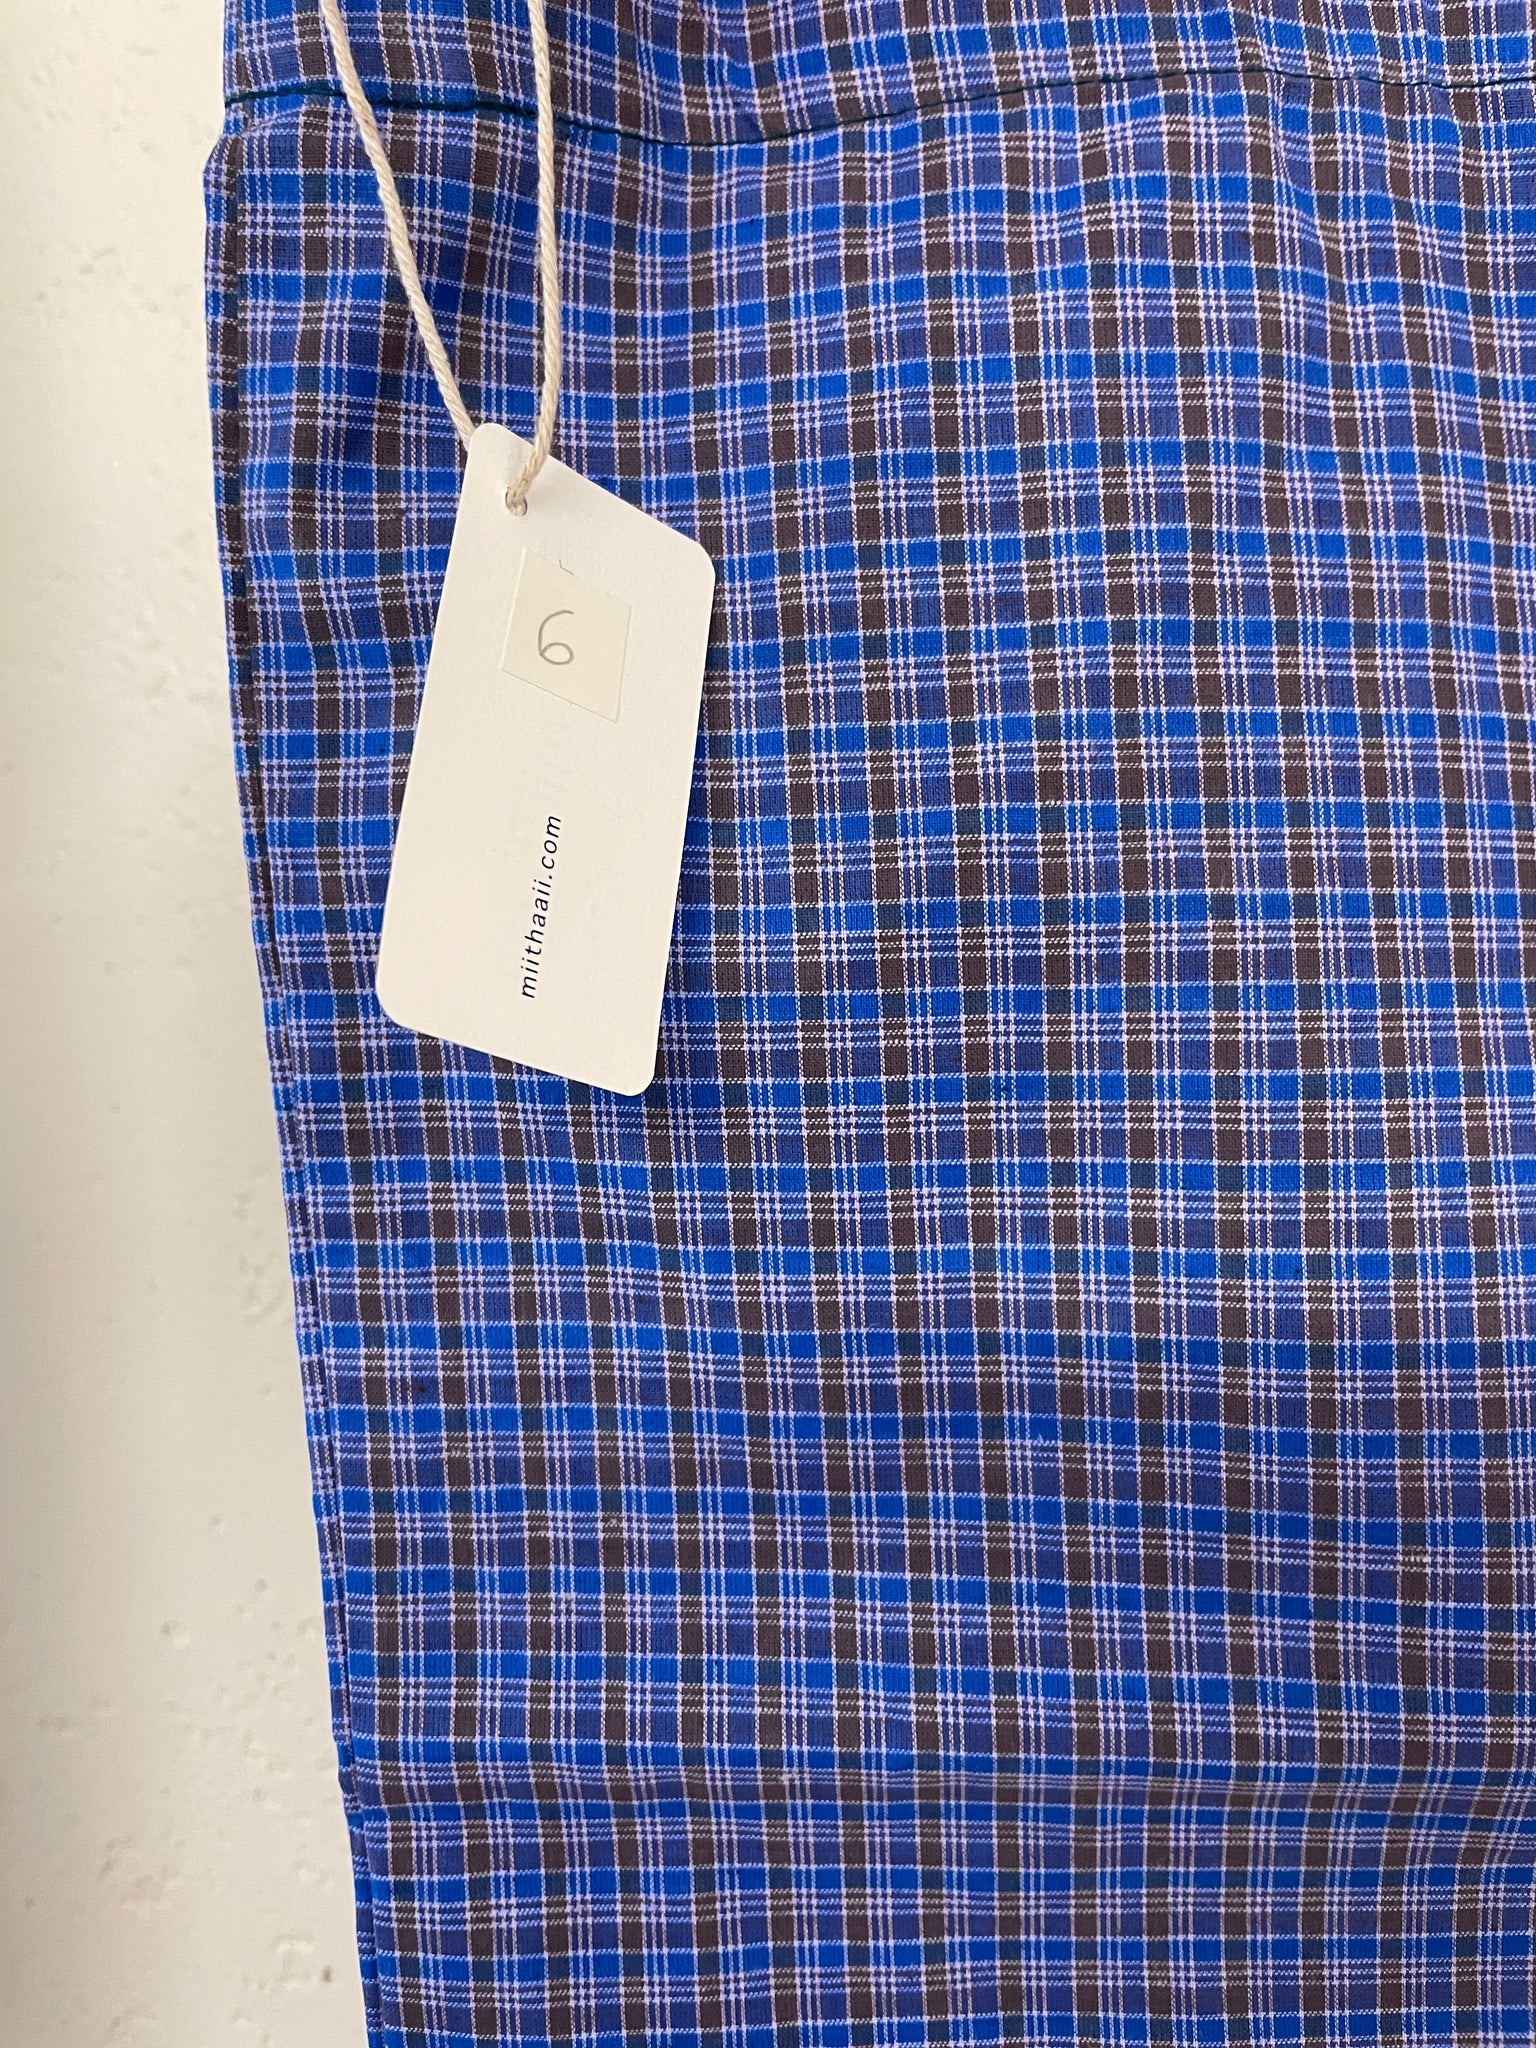 Cotton Shoulder Bag (assorted blue checks), by MiiThaaii